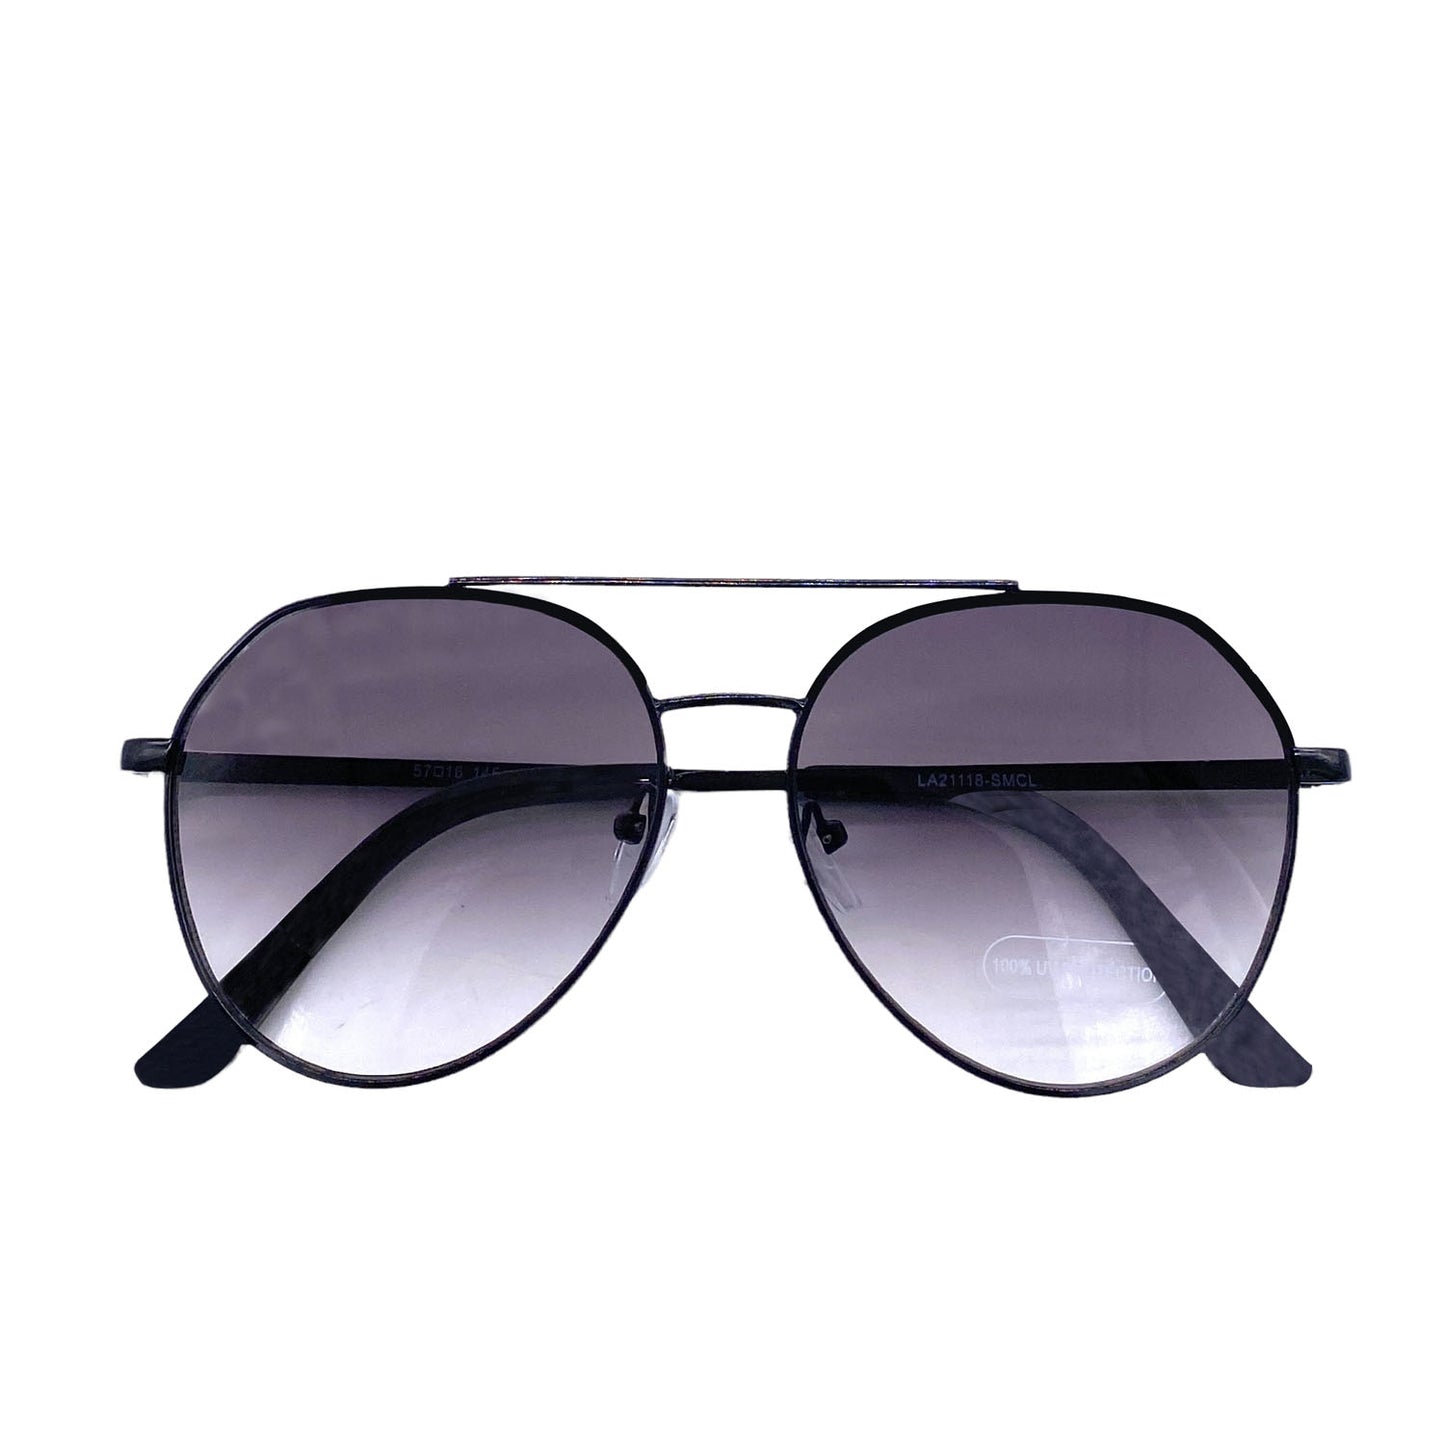 Empire Cove Gradient Aviator Sunglasses Mirrored Lens Metal Frame UV Protection